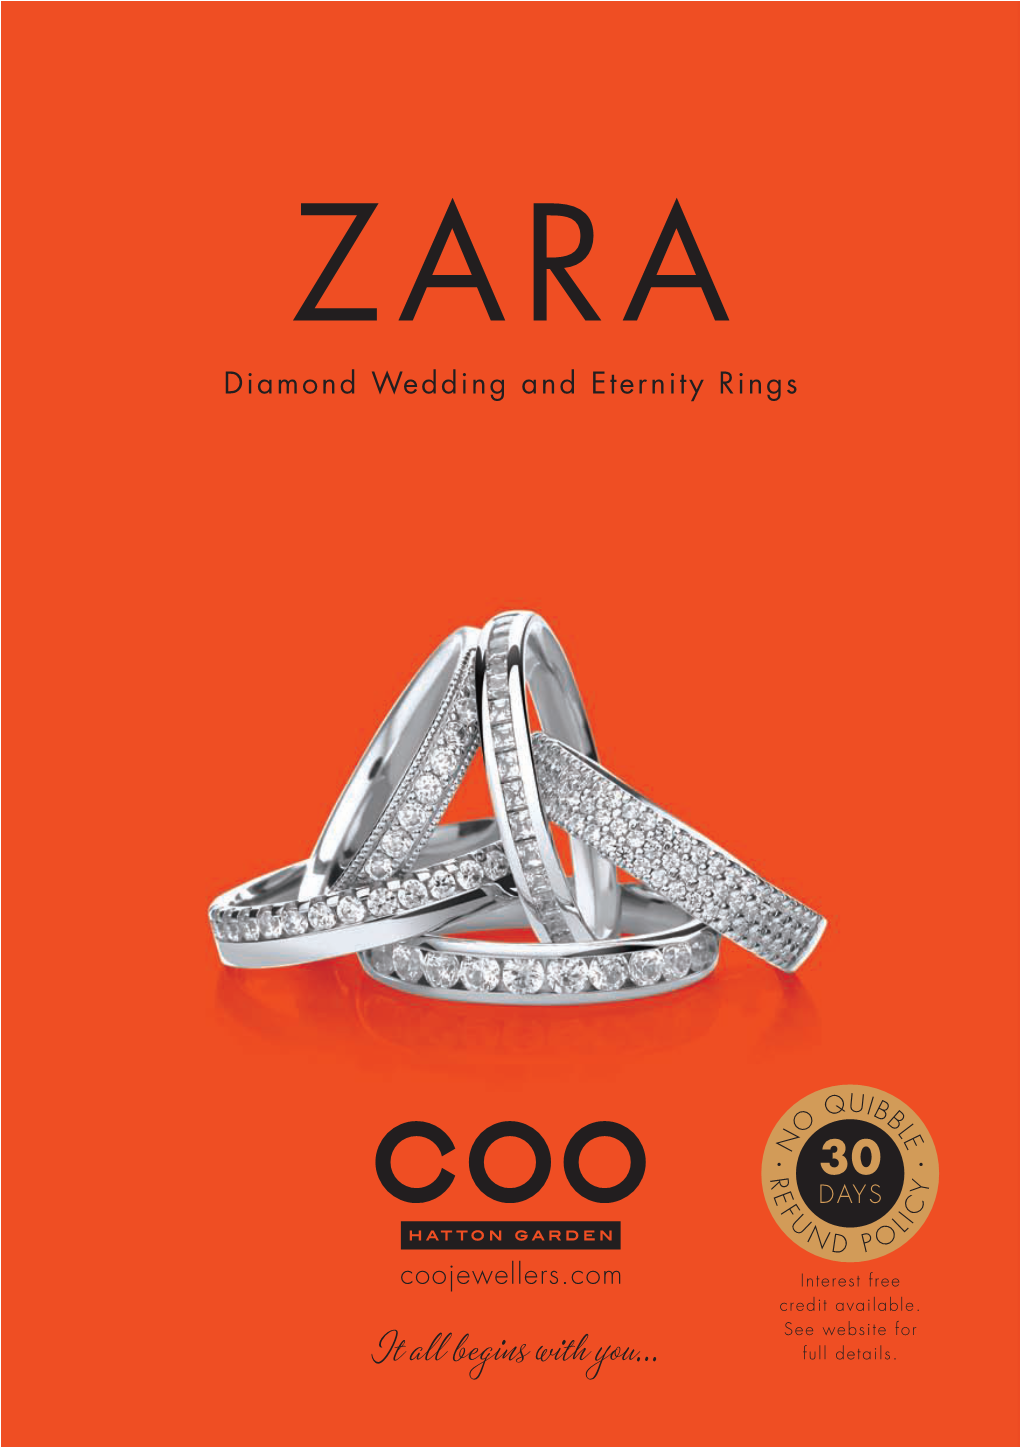 ZARA Diamond Wedding and Eternity Rings